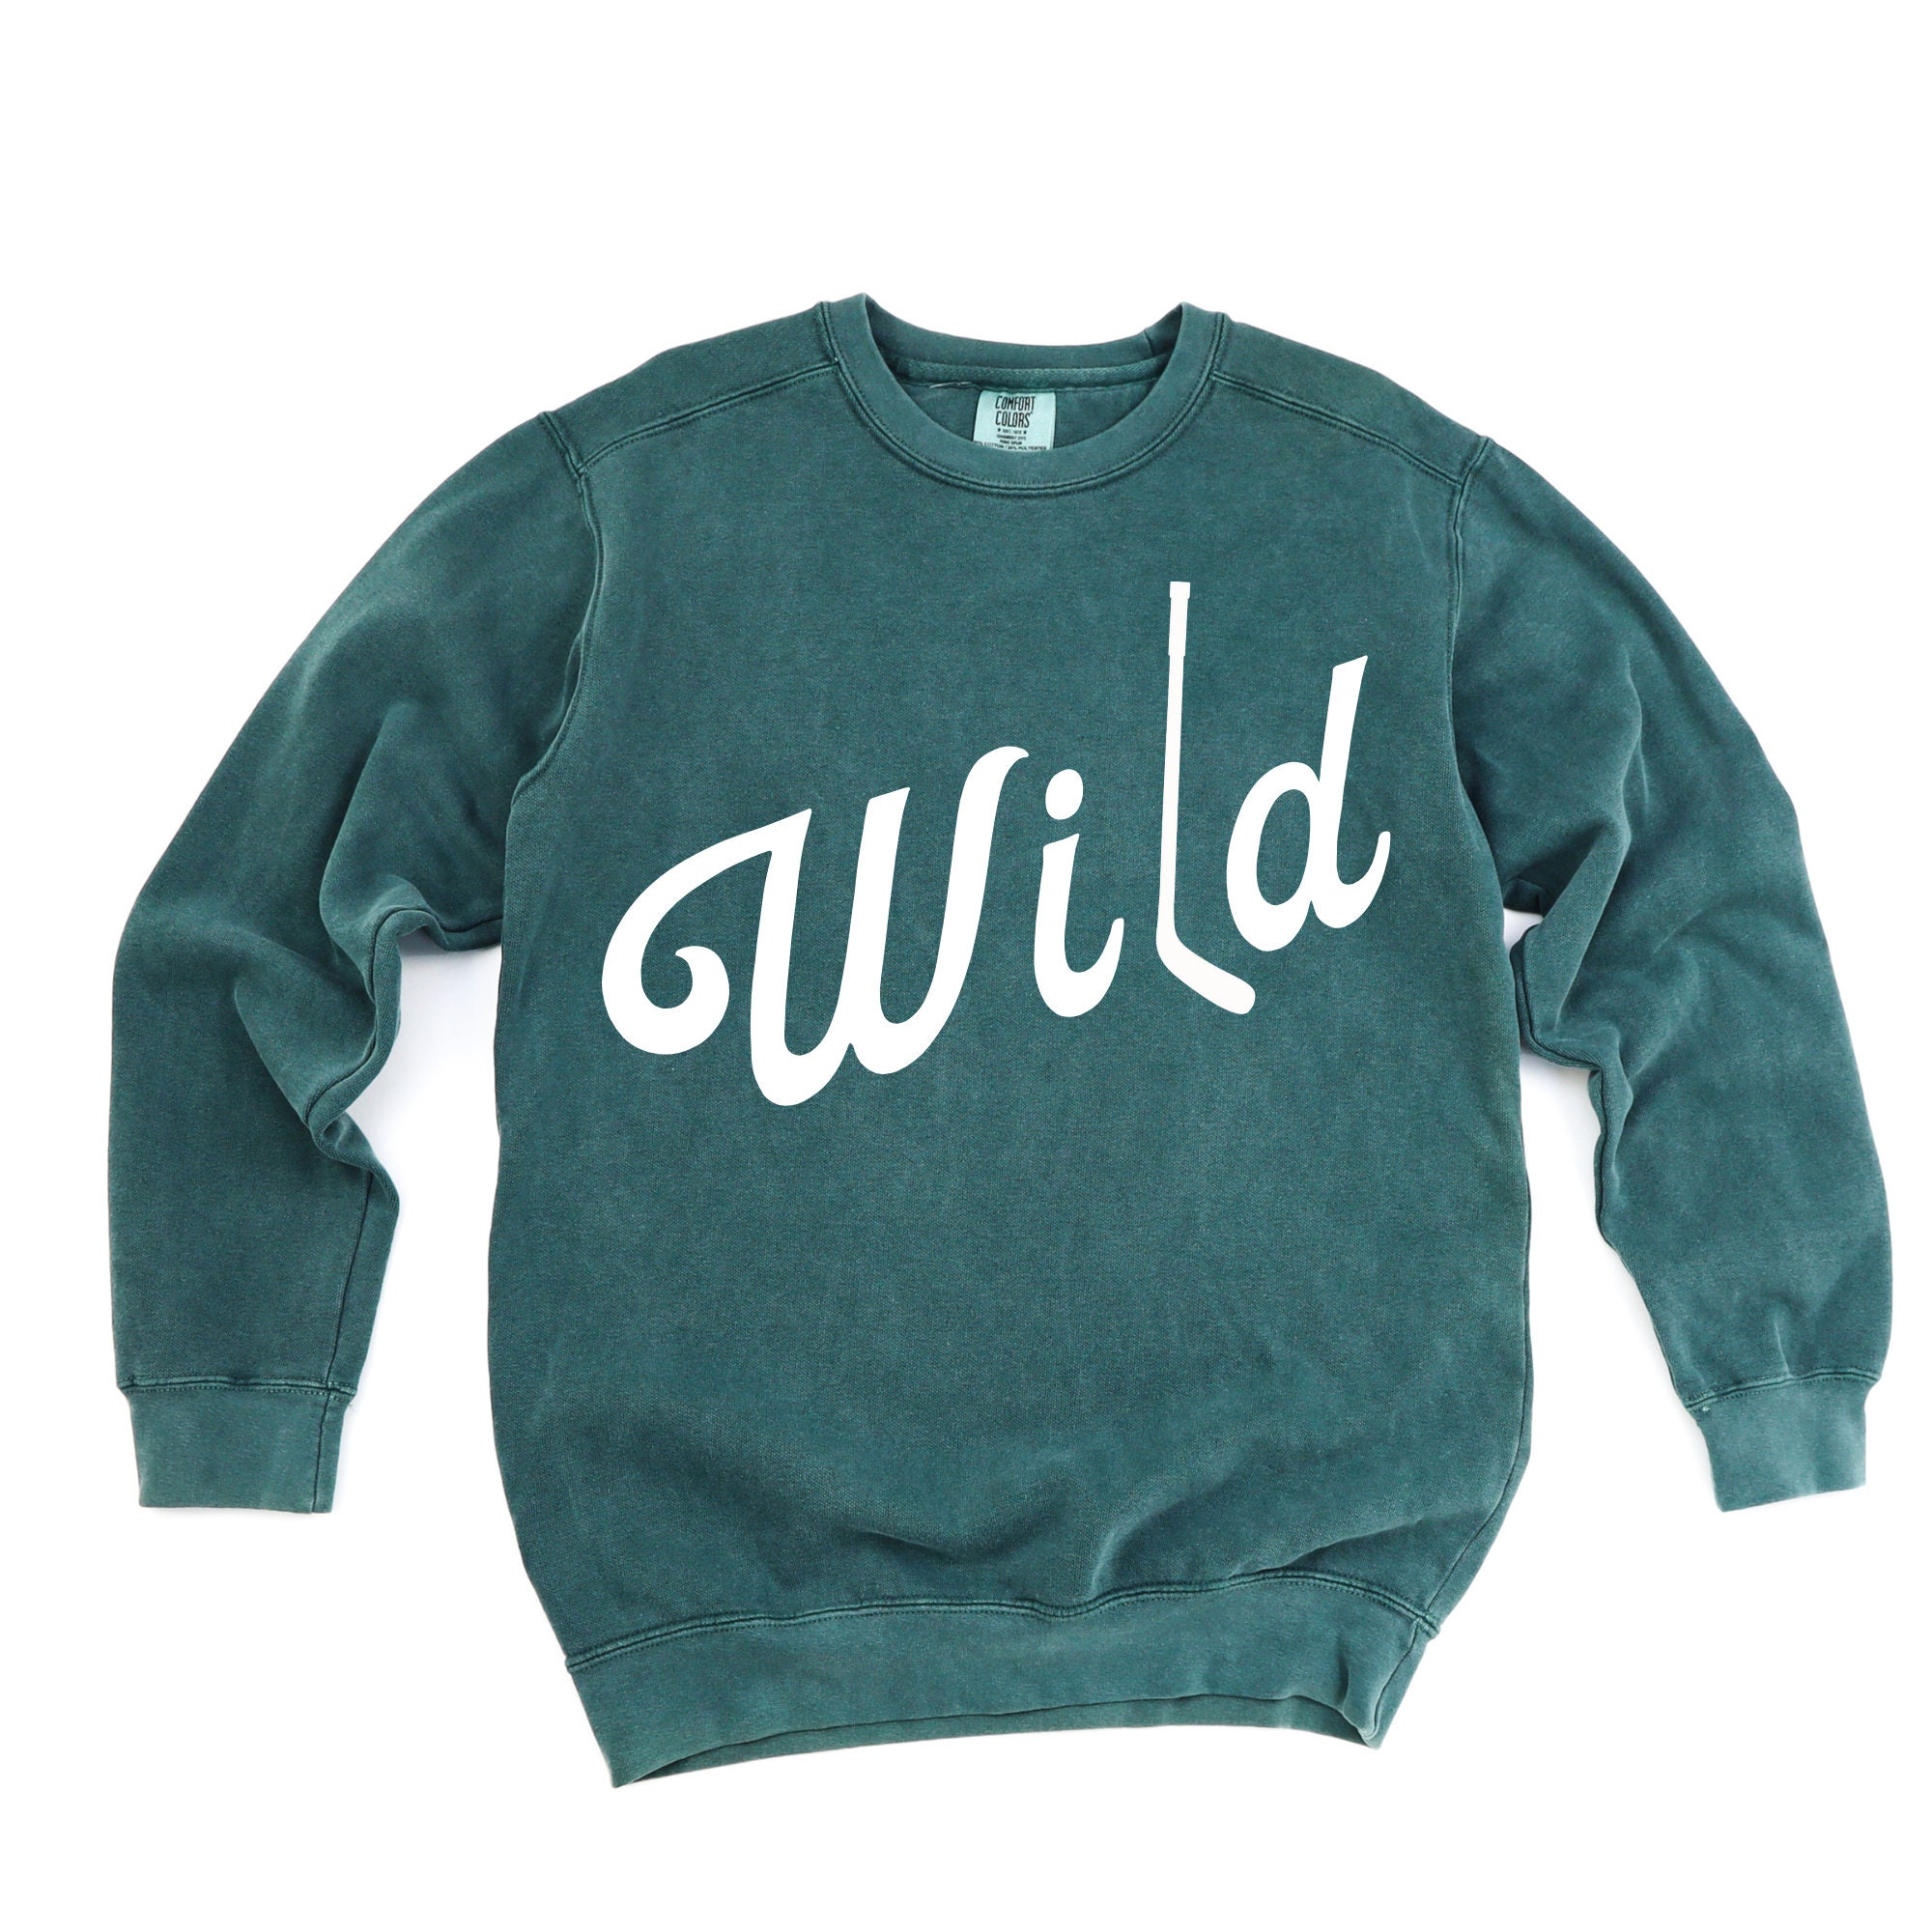 ️‍🔥 Retro Vintage Minnesota Wild Sweatshirt - Store Cloths